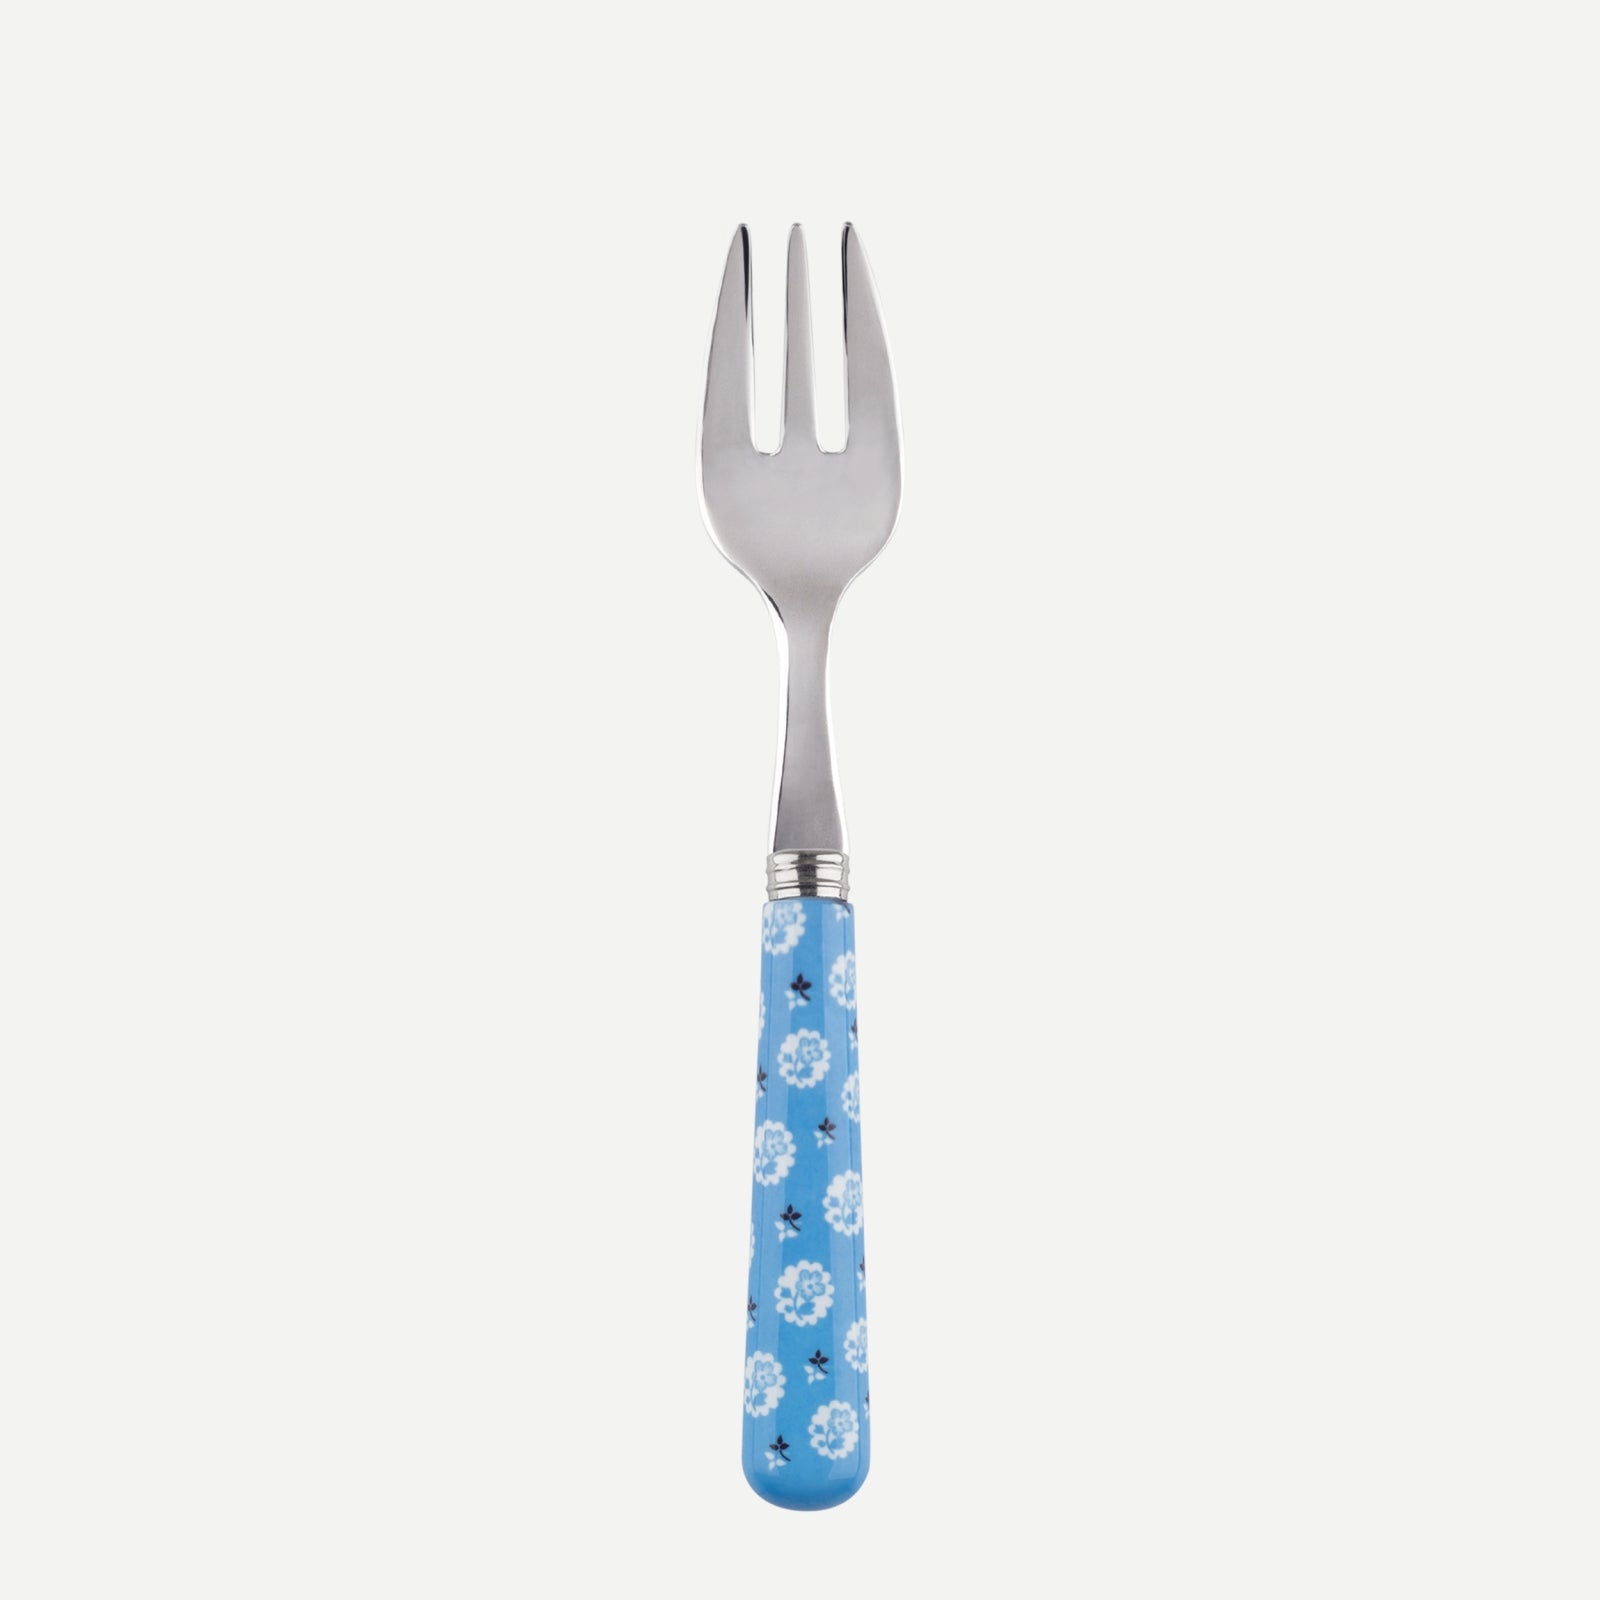 Oyster fork - Provencal - Light blue